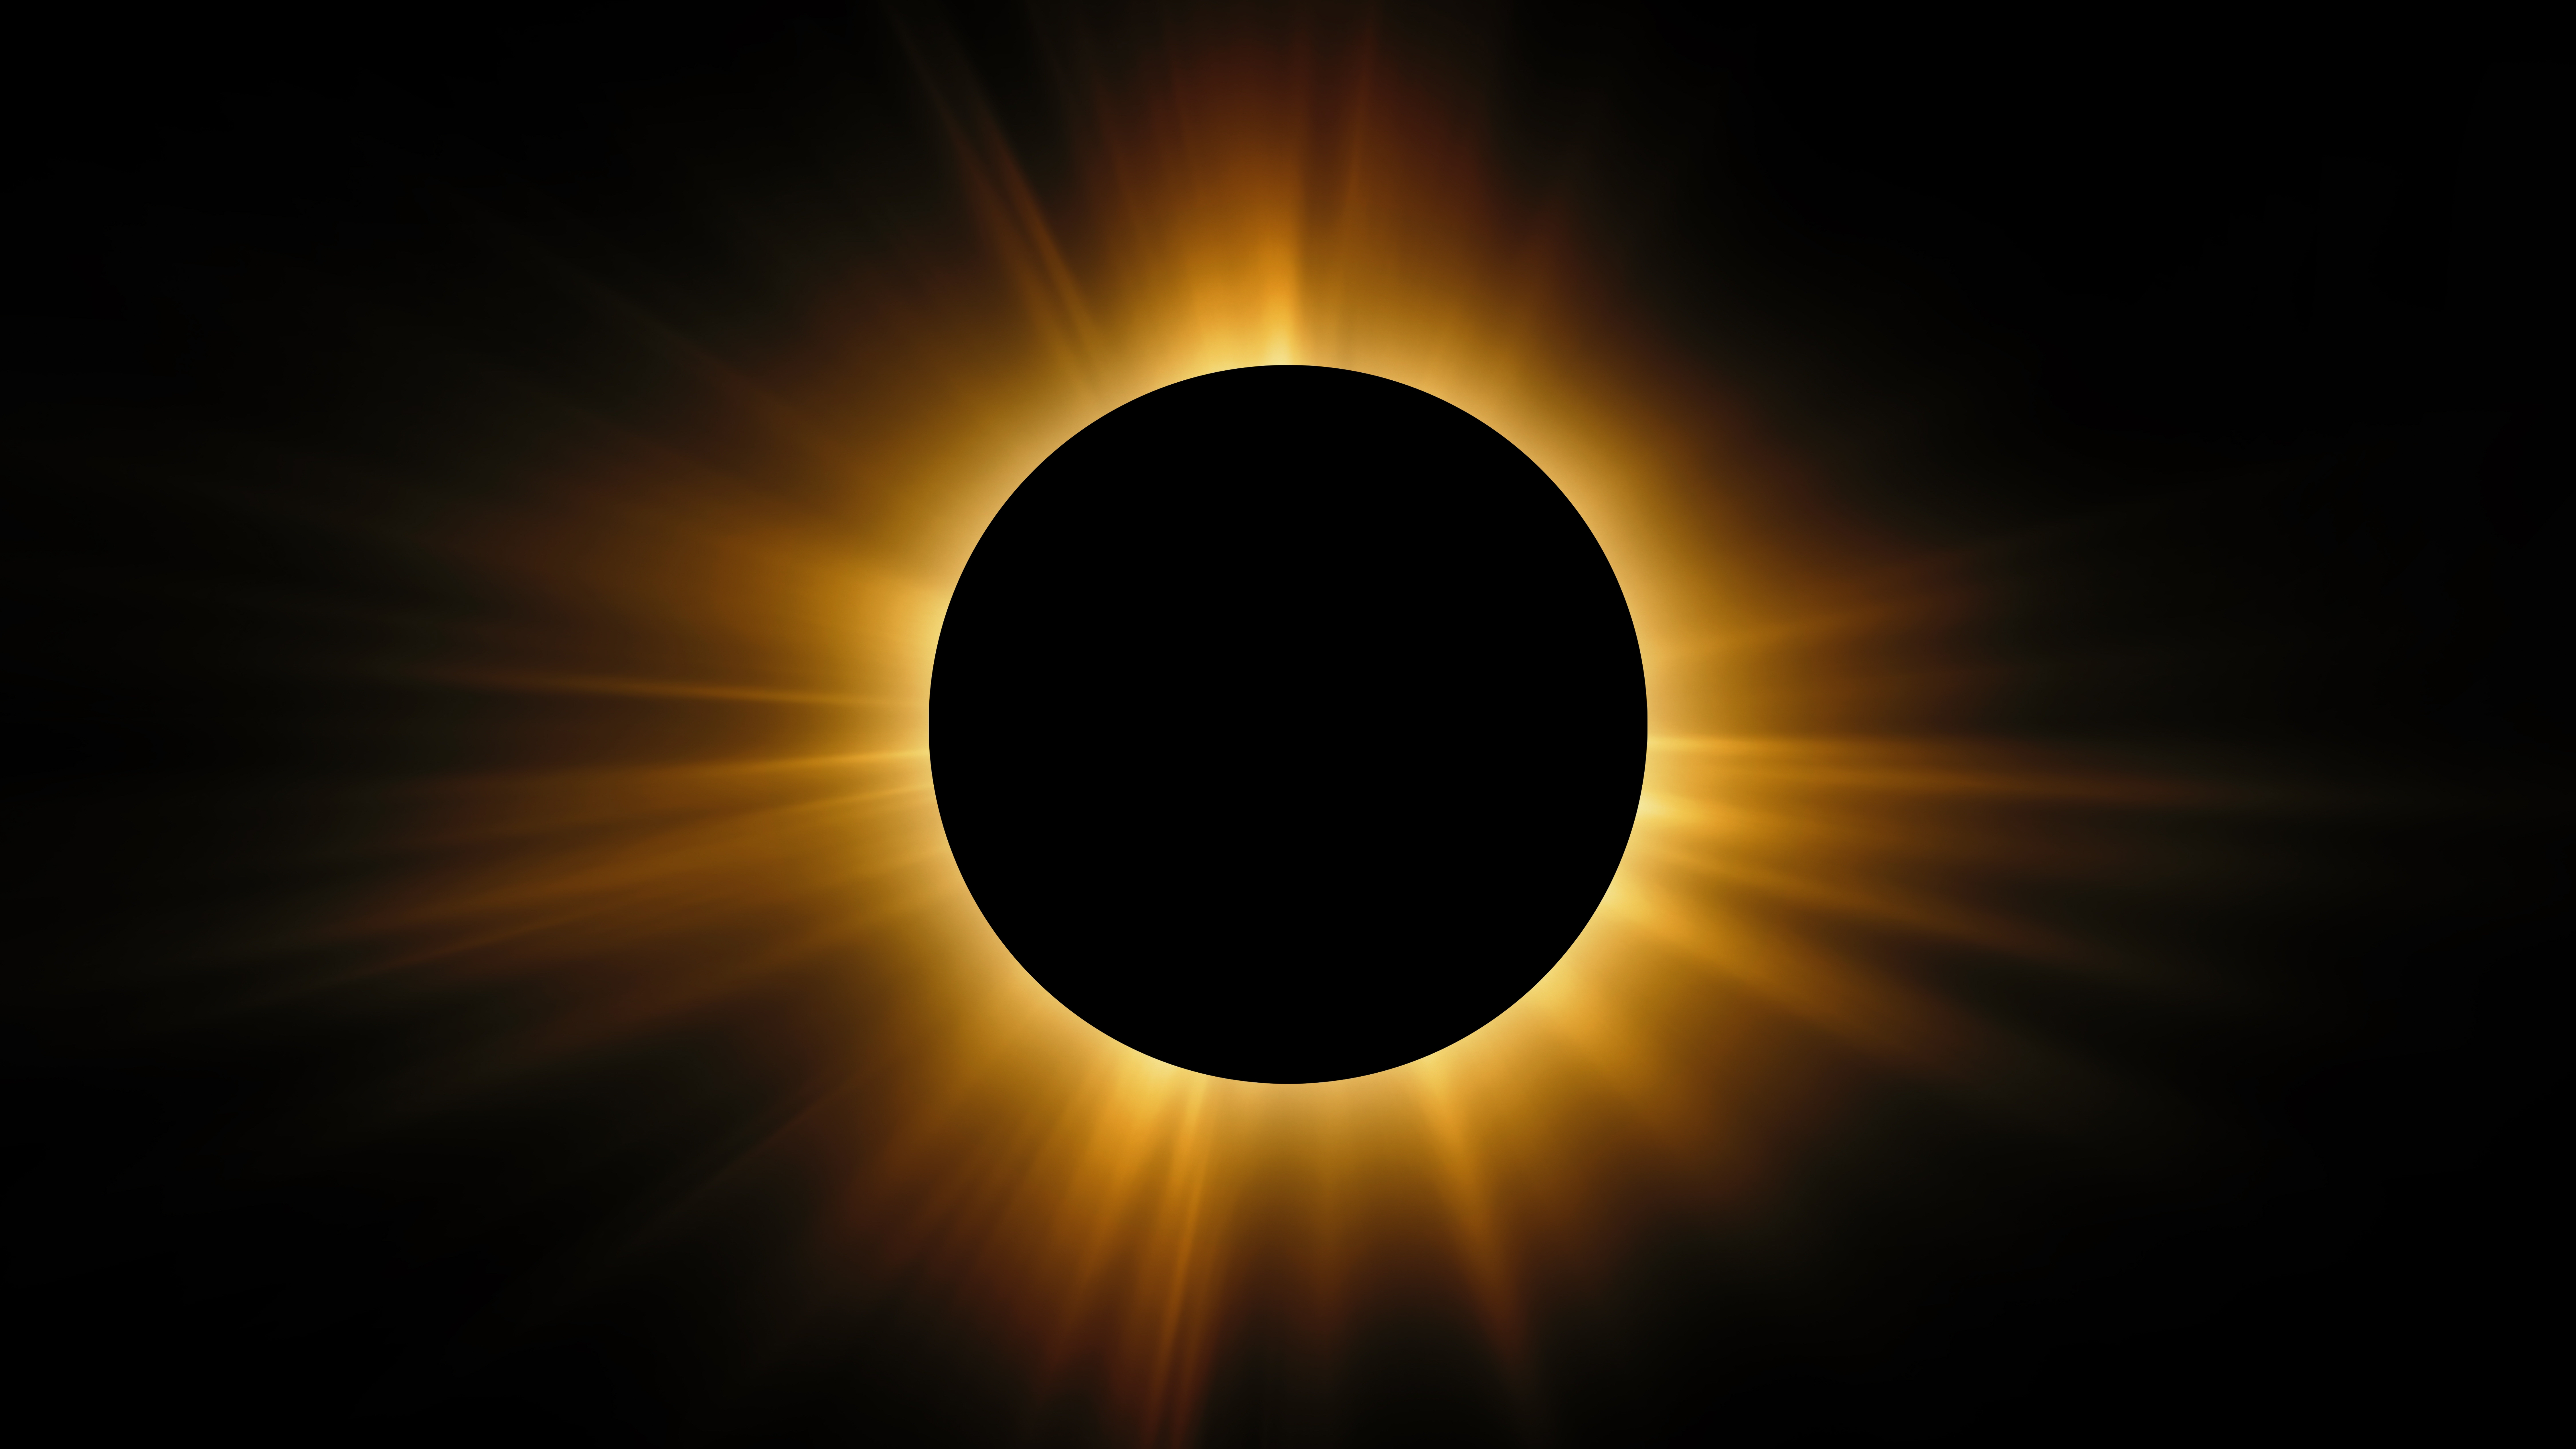 Total Solar Eclipse showing the sun's corona